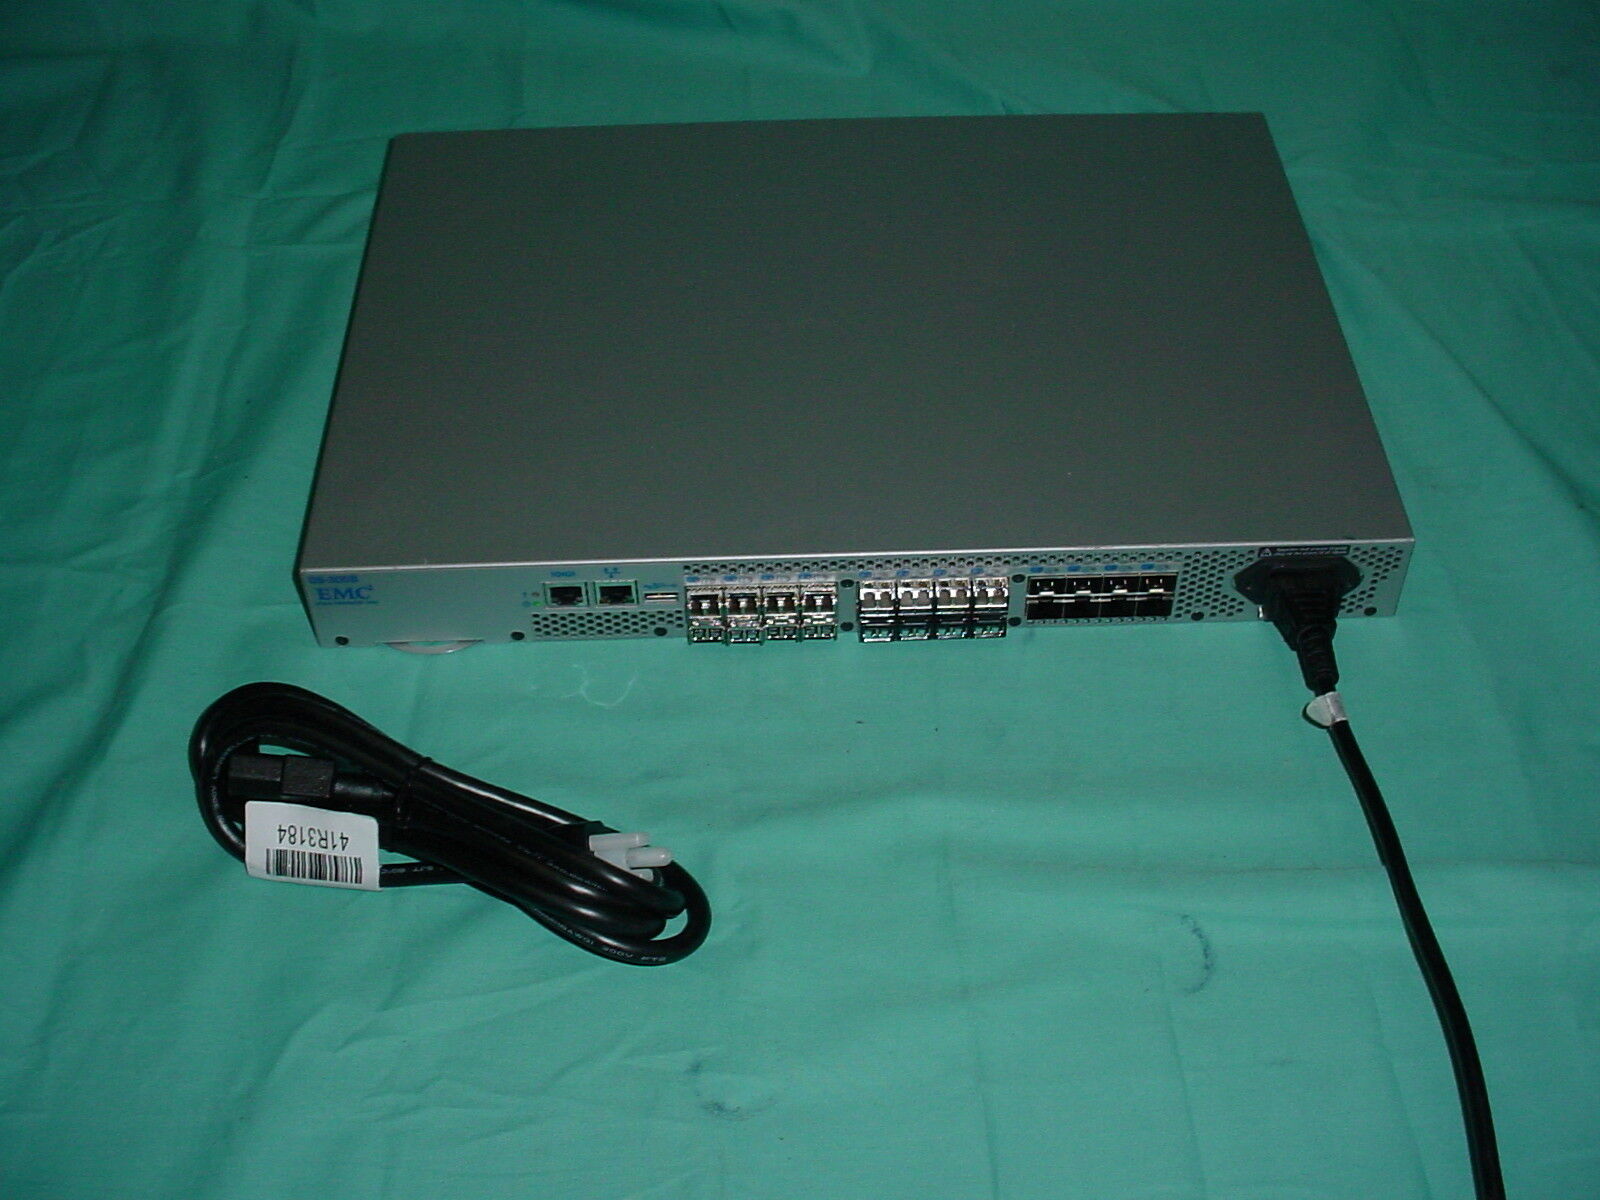 EMC2/Brocade 300 DS-300B Fibre Channel Switch #2